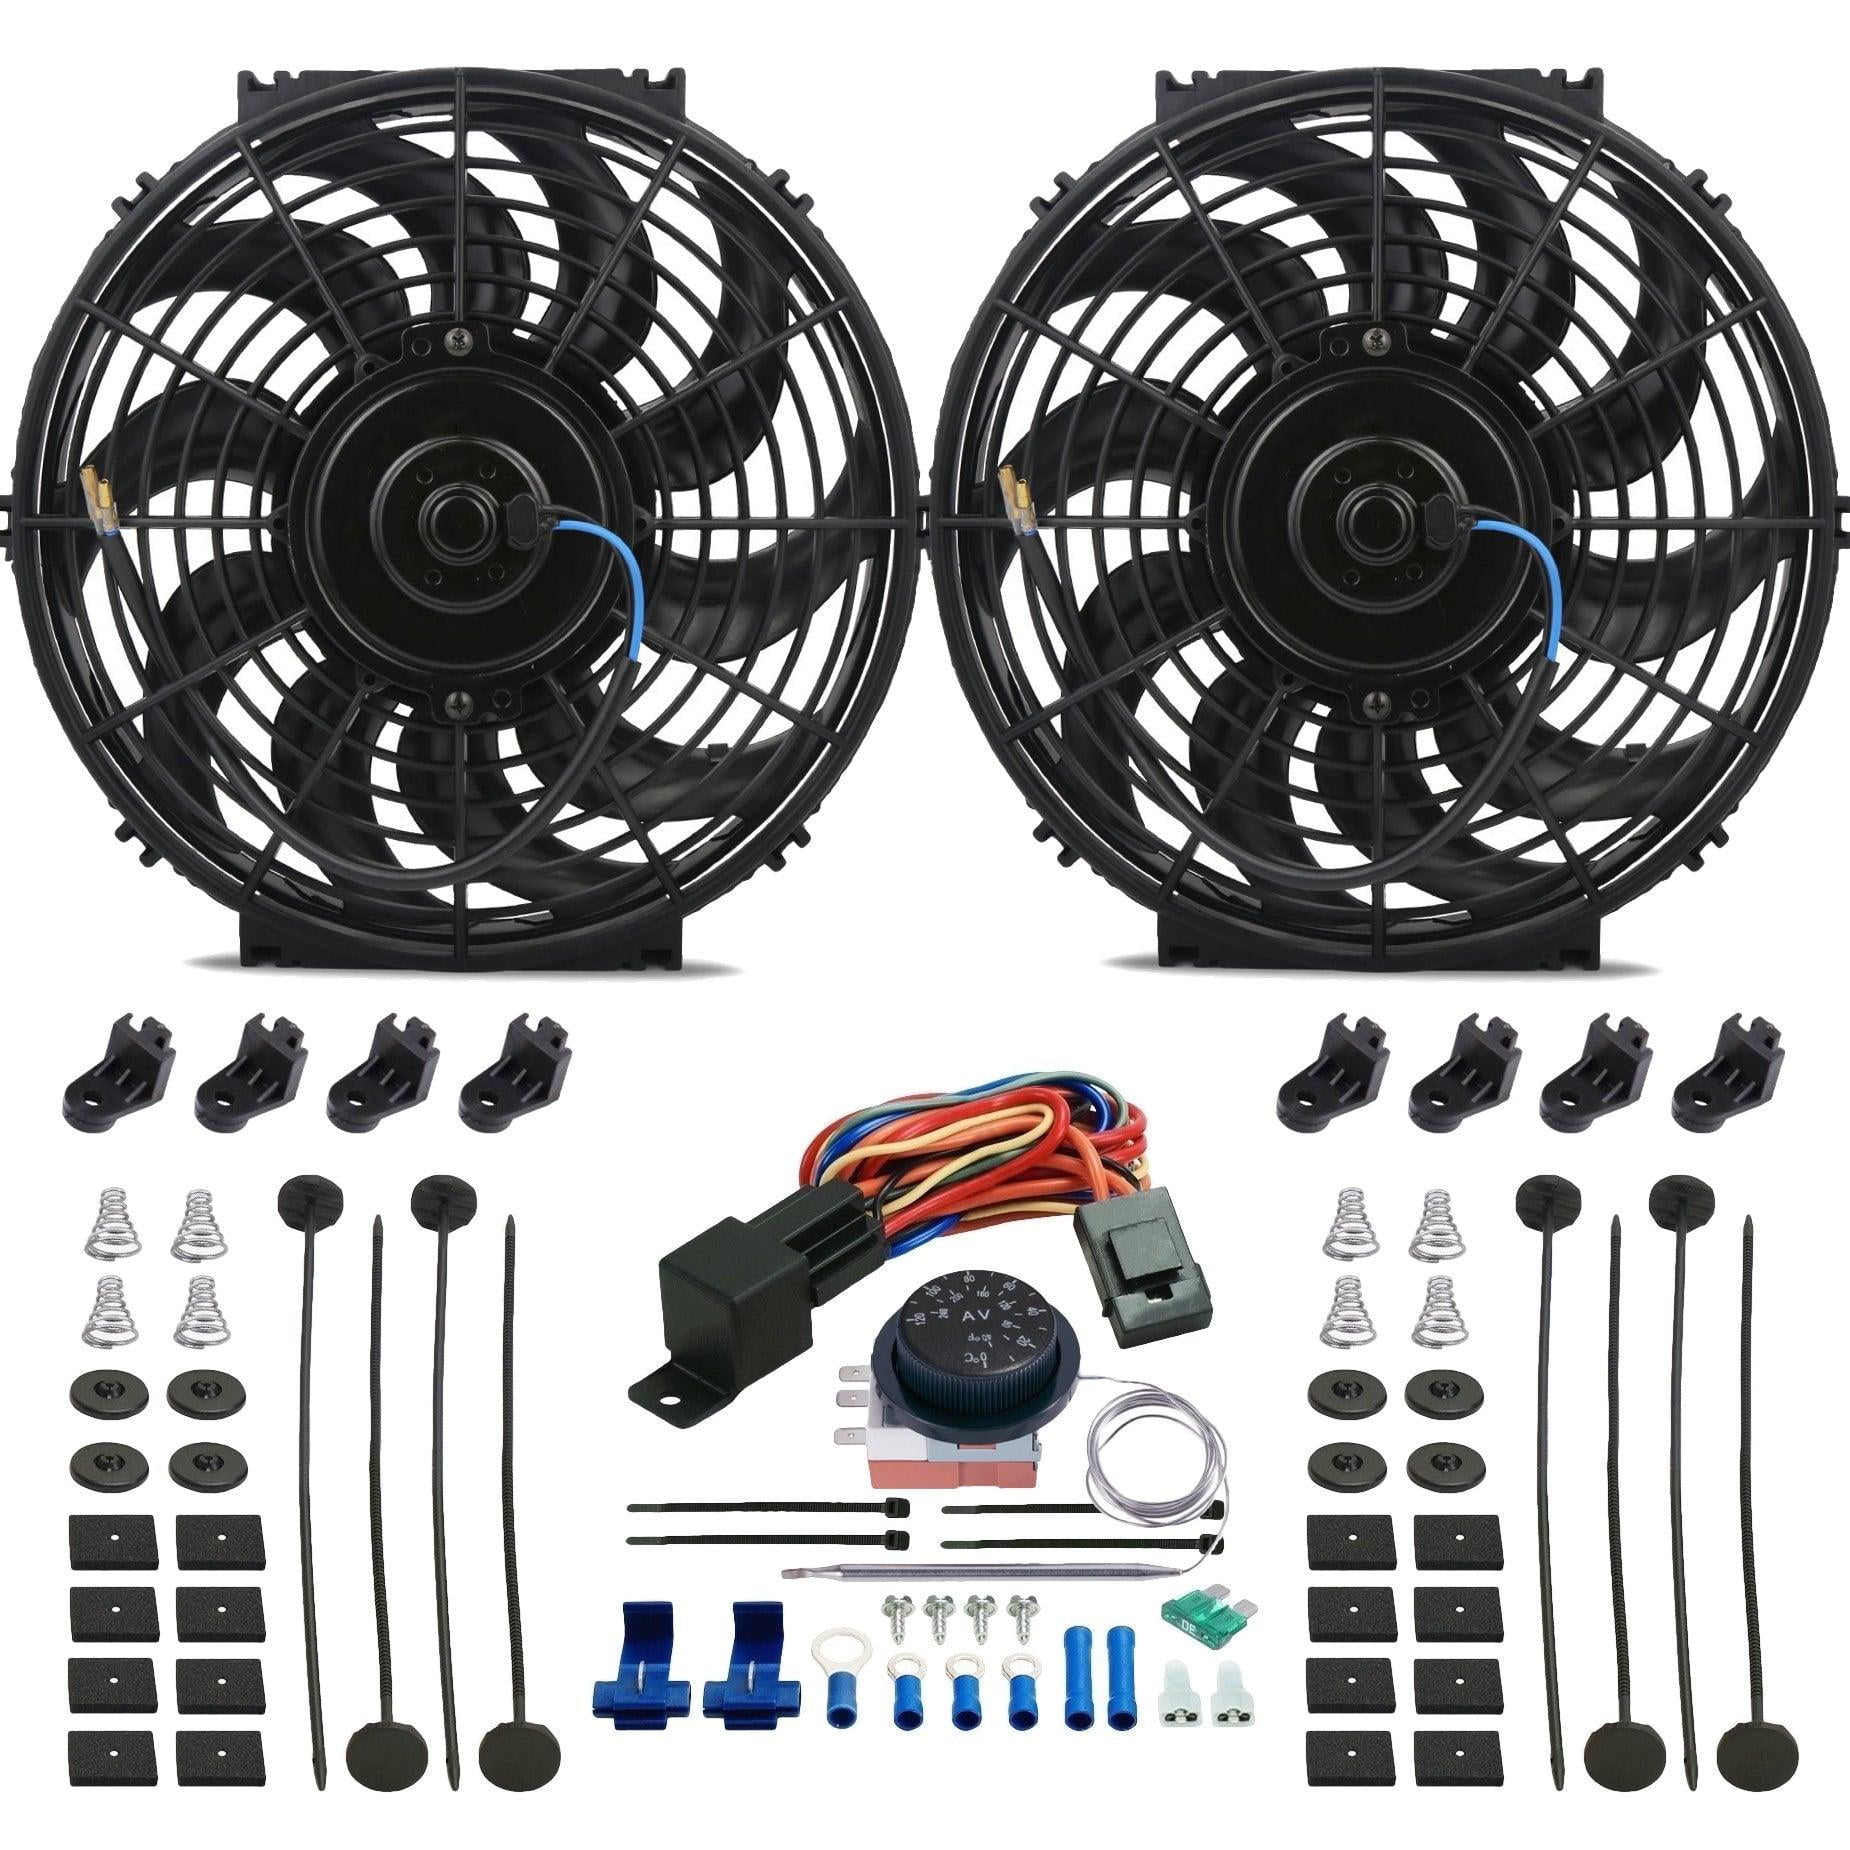 Dual 12-13" Inch Radiator Cooling Fans Adjustable Temp Controller Kit - Walmart.com